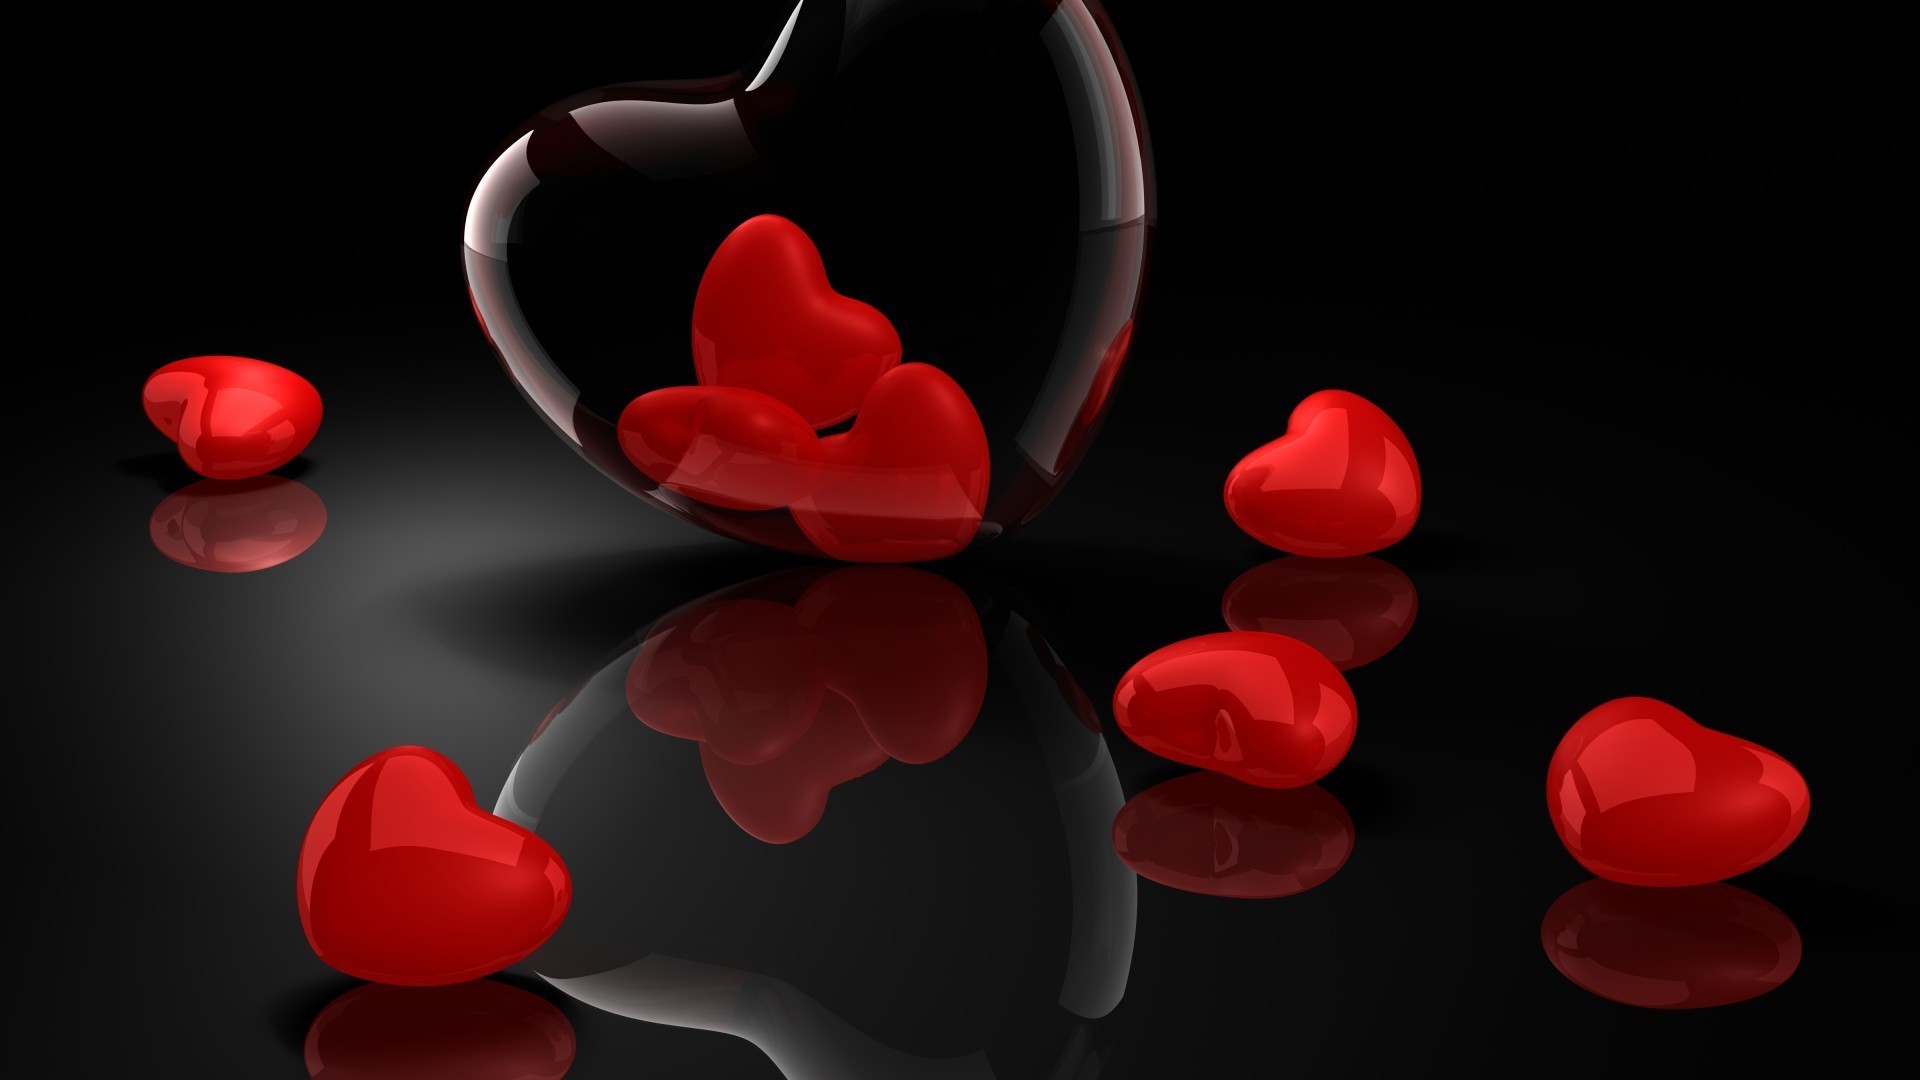 hearts romance love heart shape romantic desktop medicine abstract valentines day illustration affection symbol